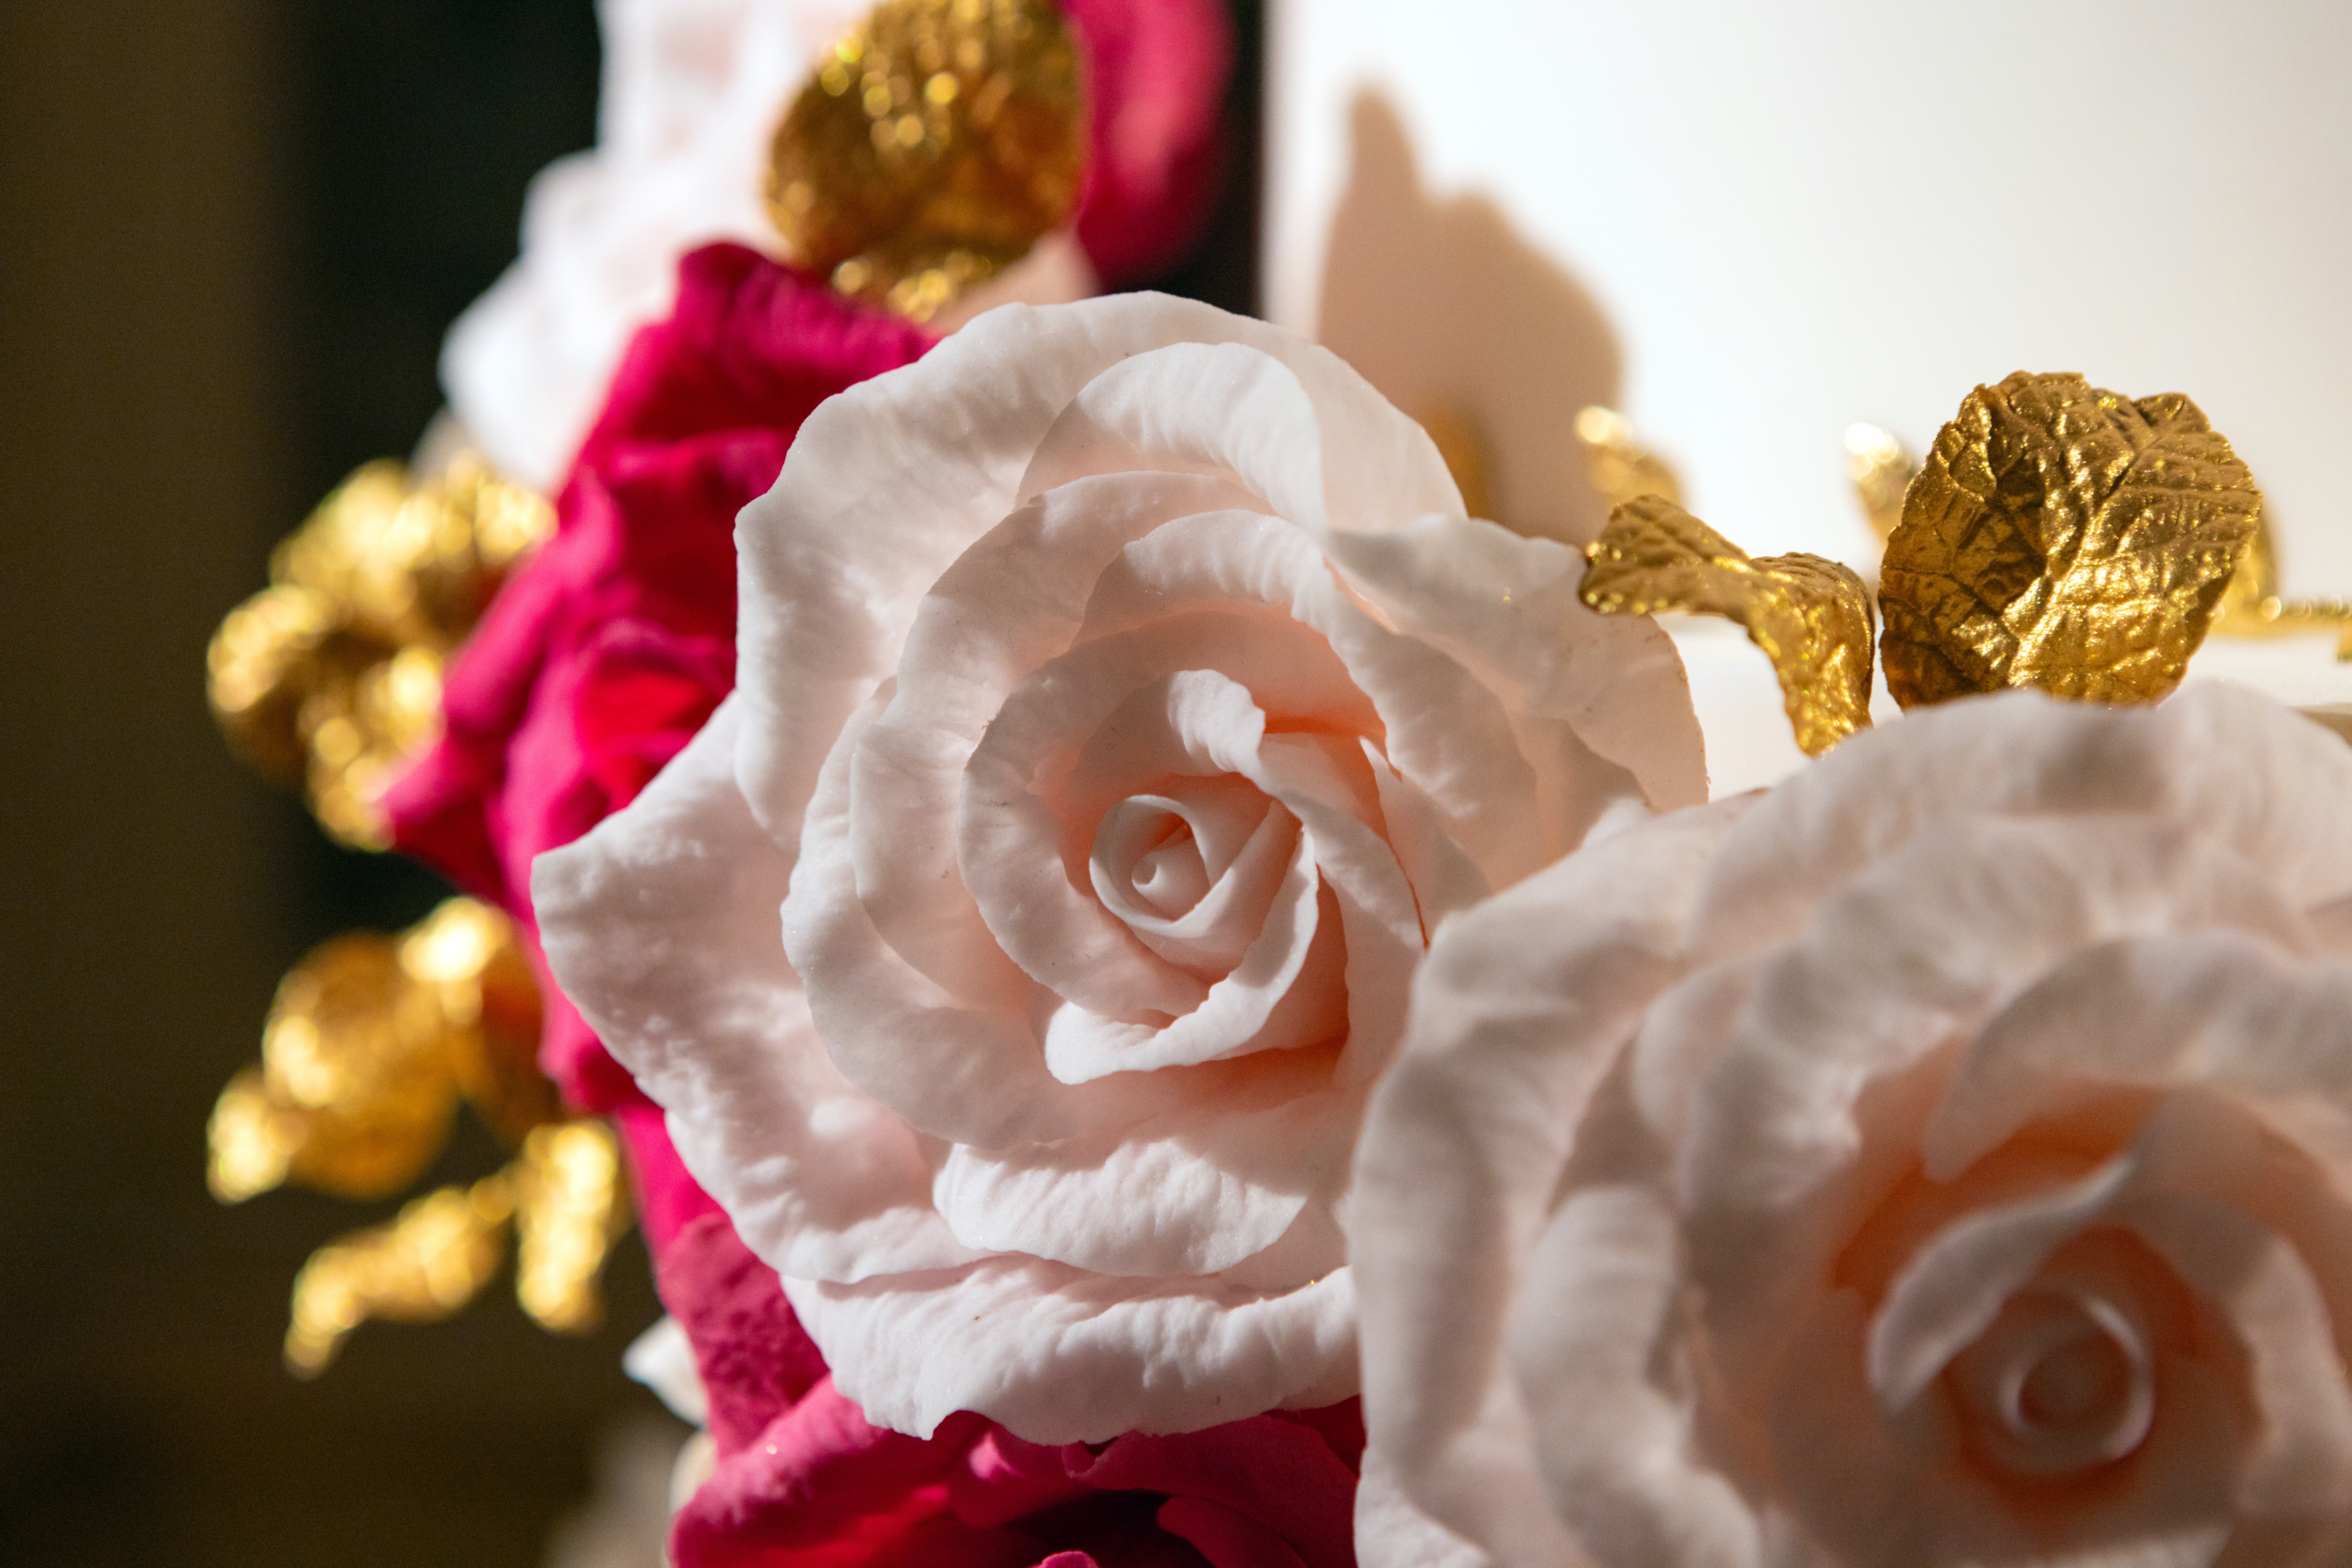 Sugar rose detail from luxury wedding cake, Rene By Yevnig